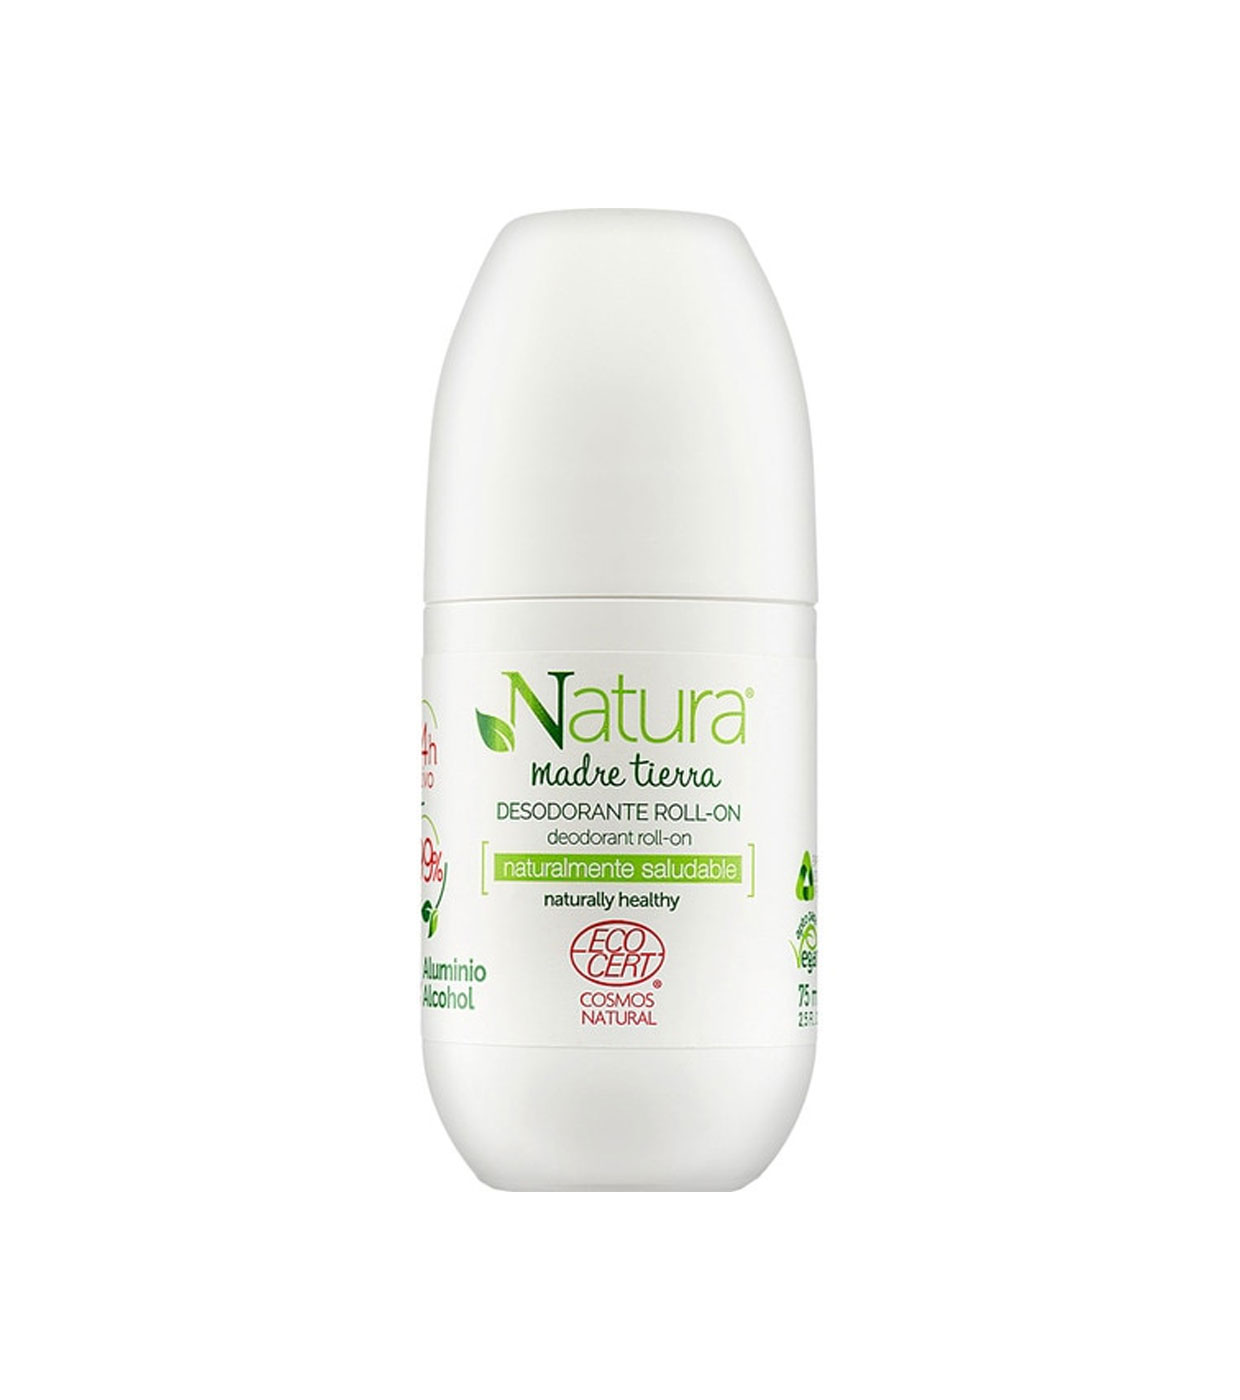 Buy Instituto Español - Natura Madre Tierra roll-on deodorant | Maquibeauty